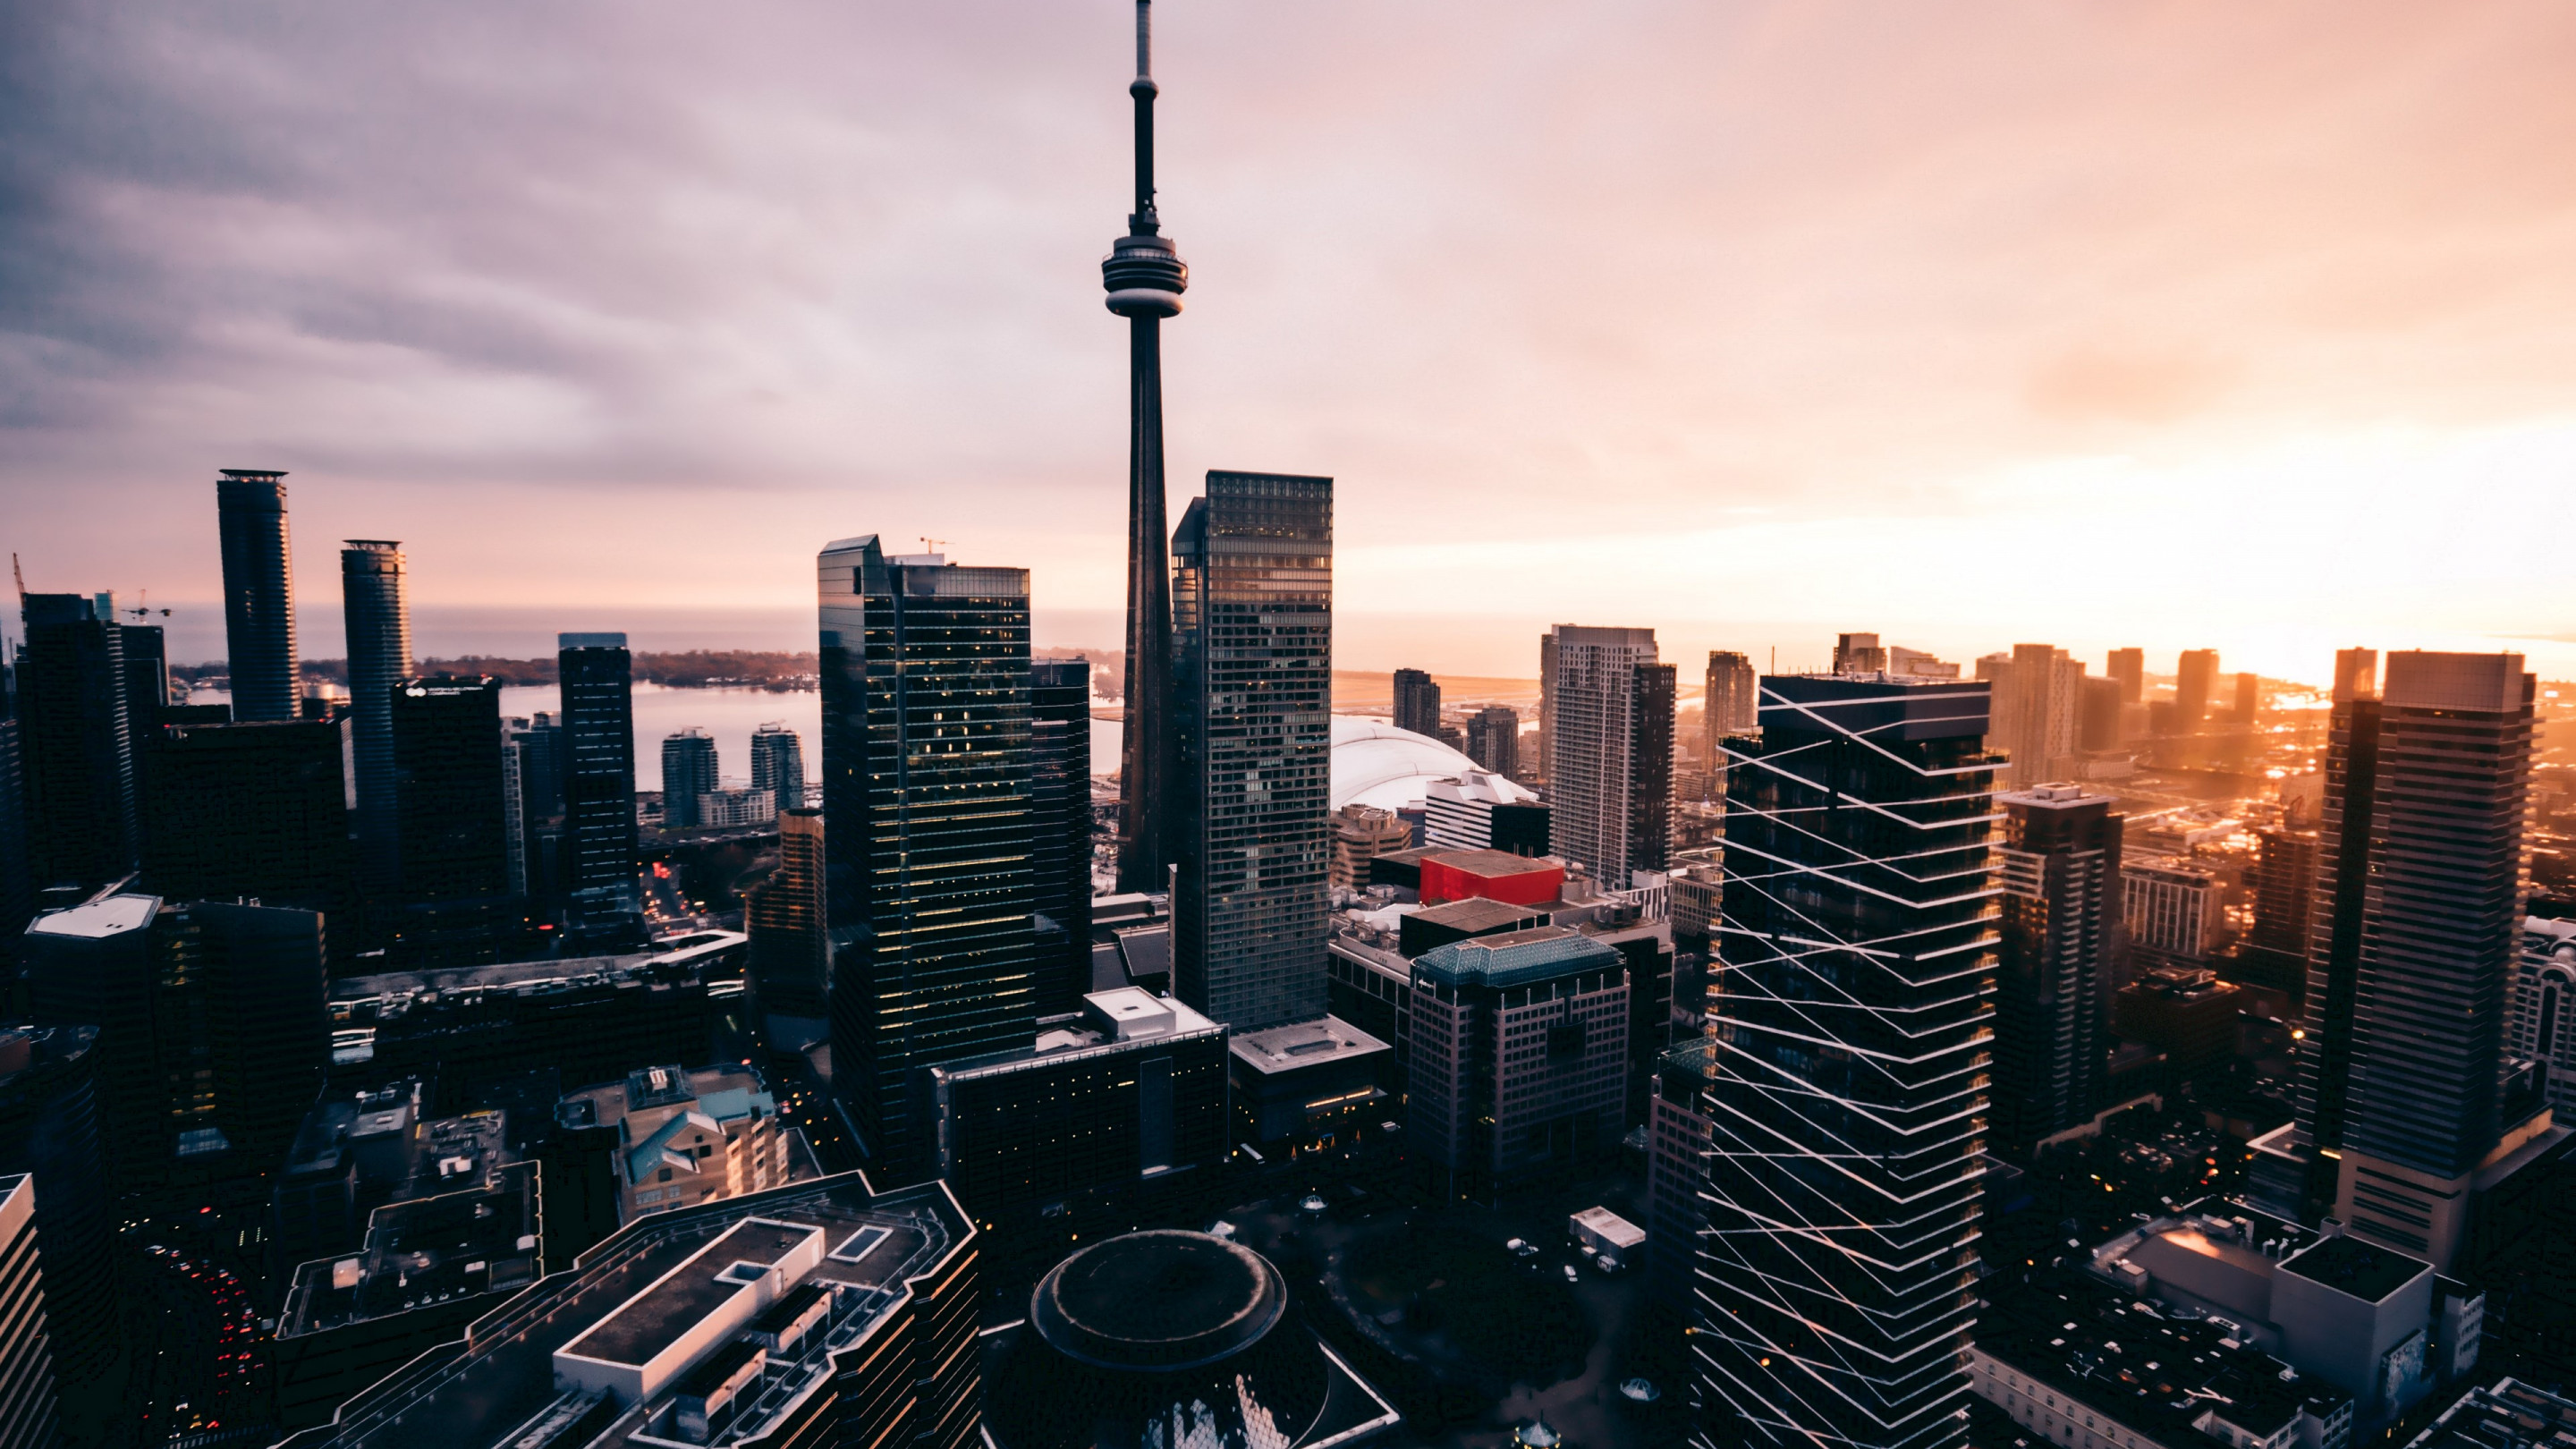 Skyscraper from Toronto wallpaper 2880x1620